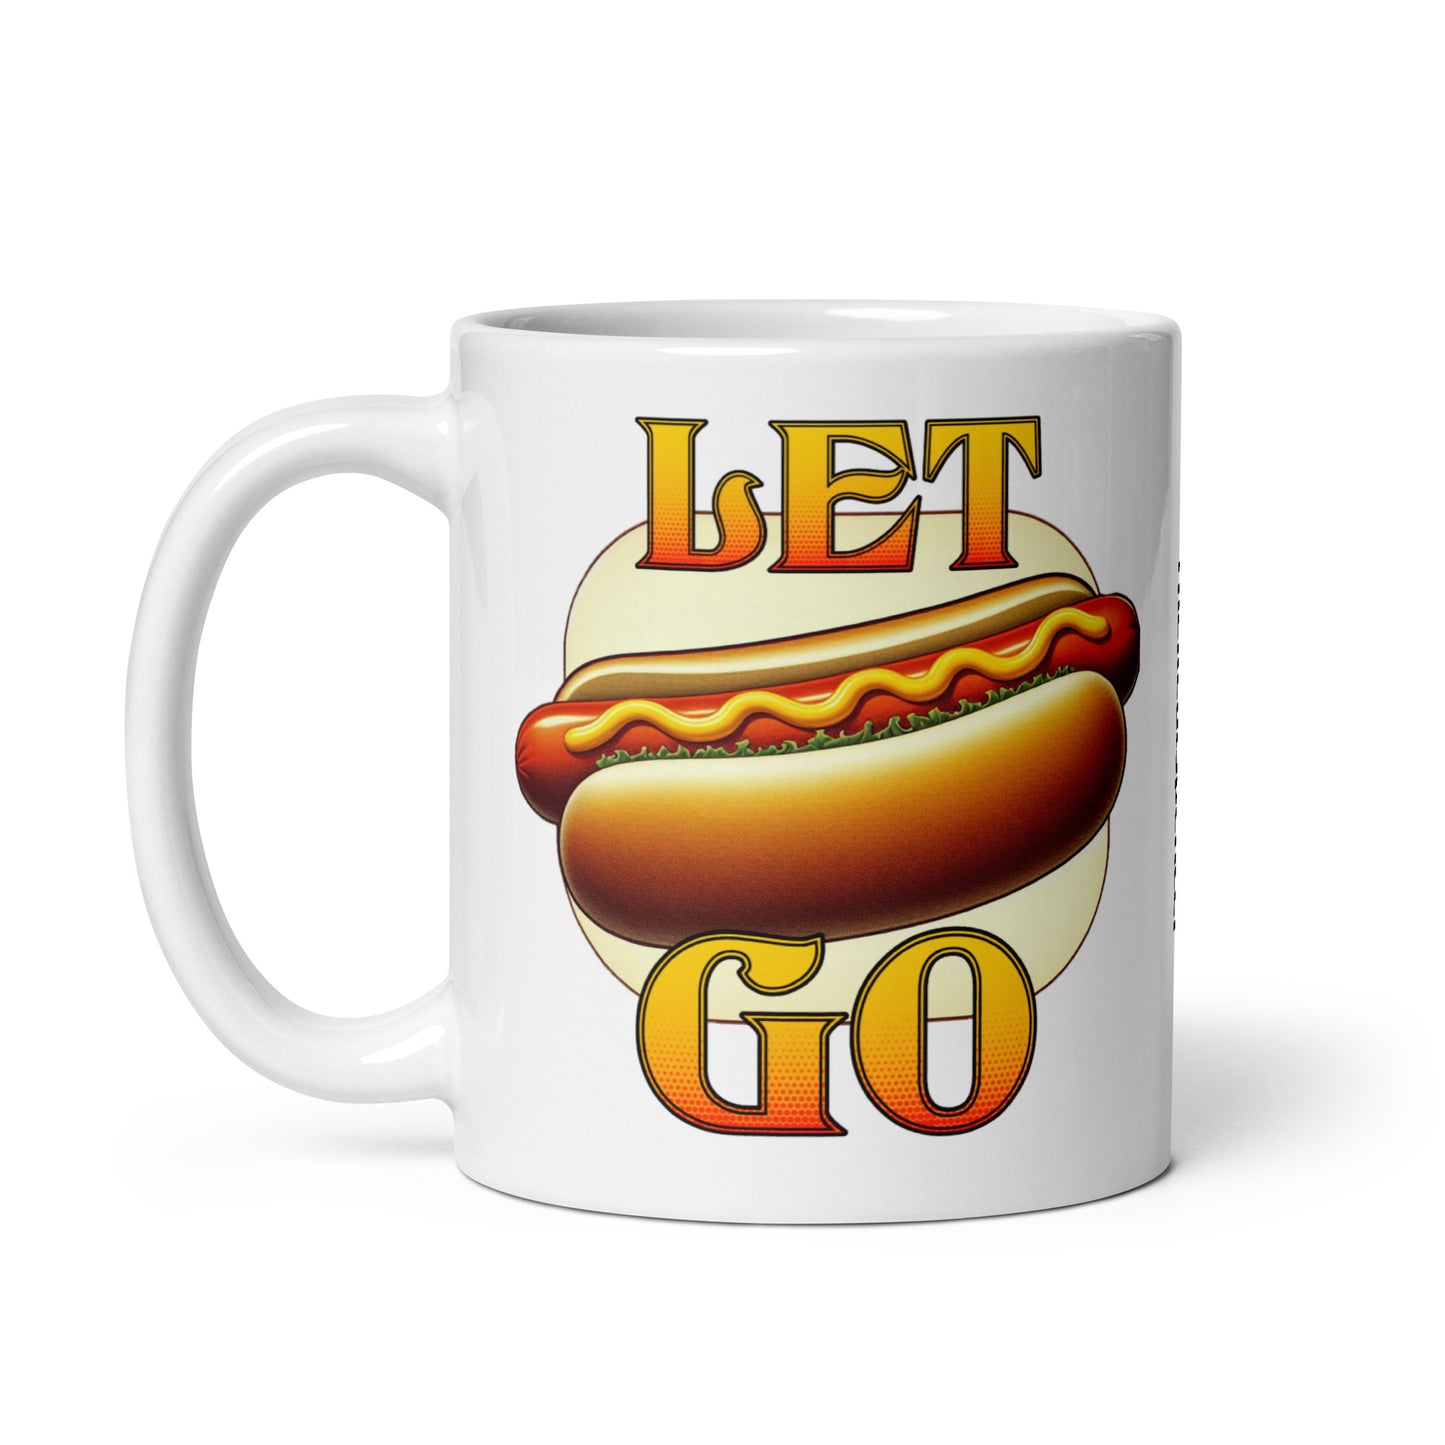 Let Go Mug